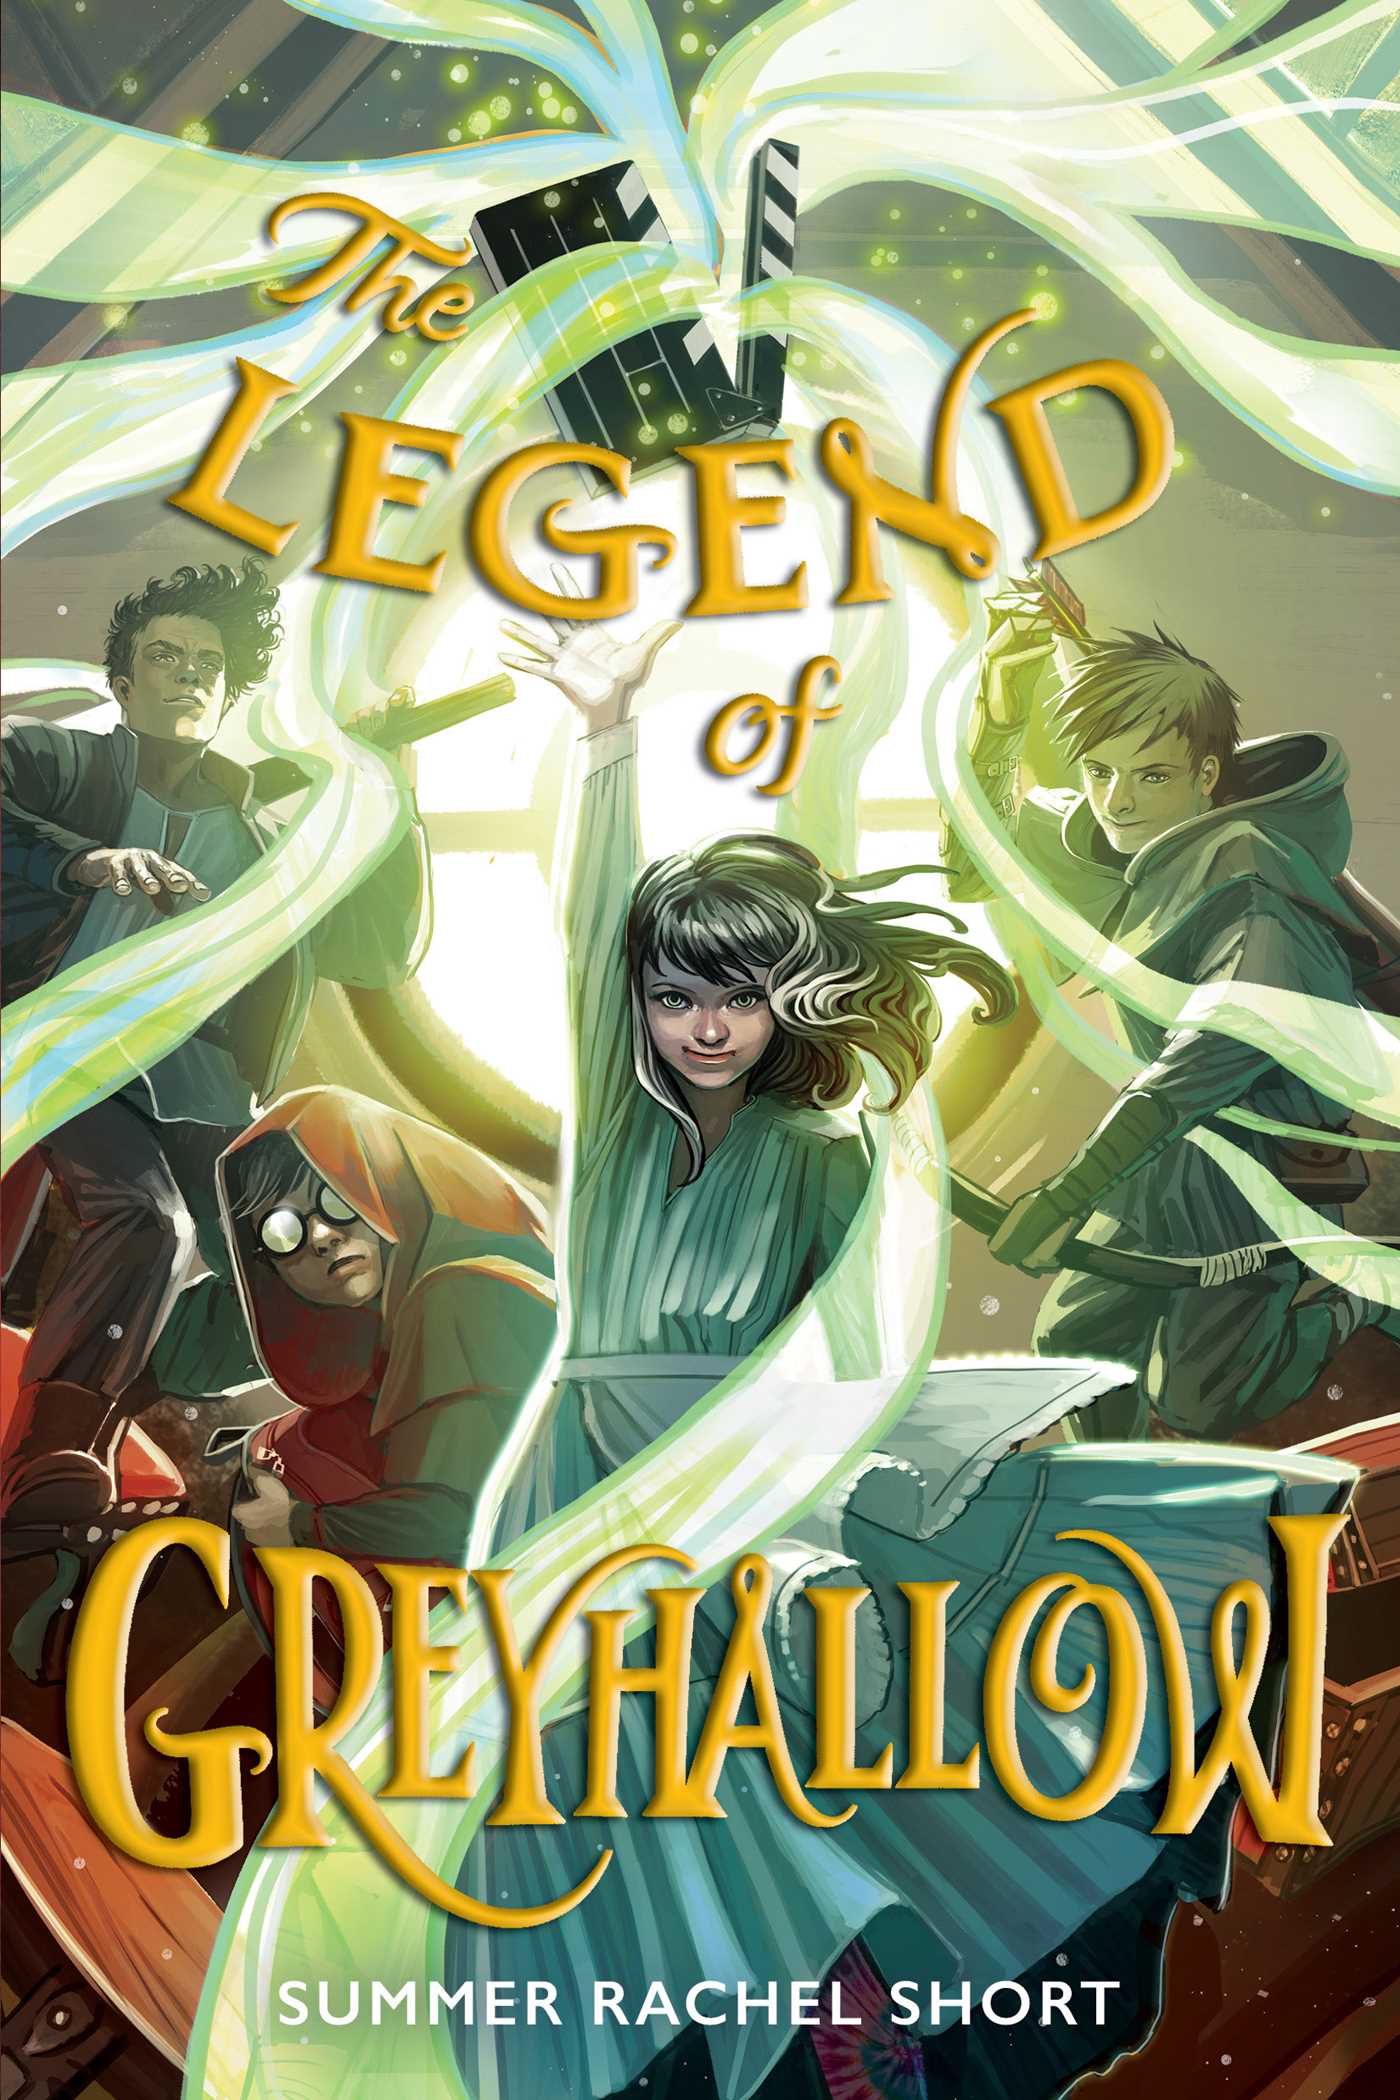 The Legend of Greyhallow